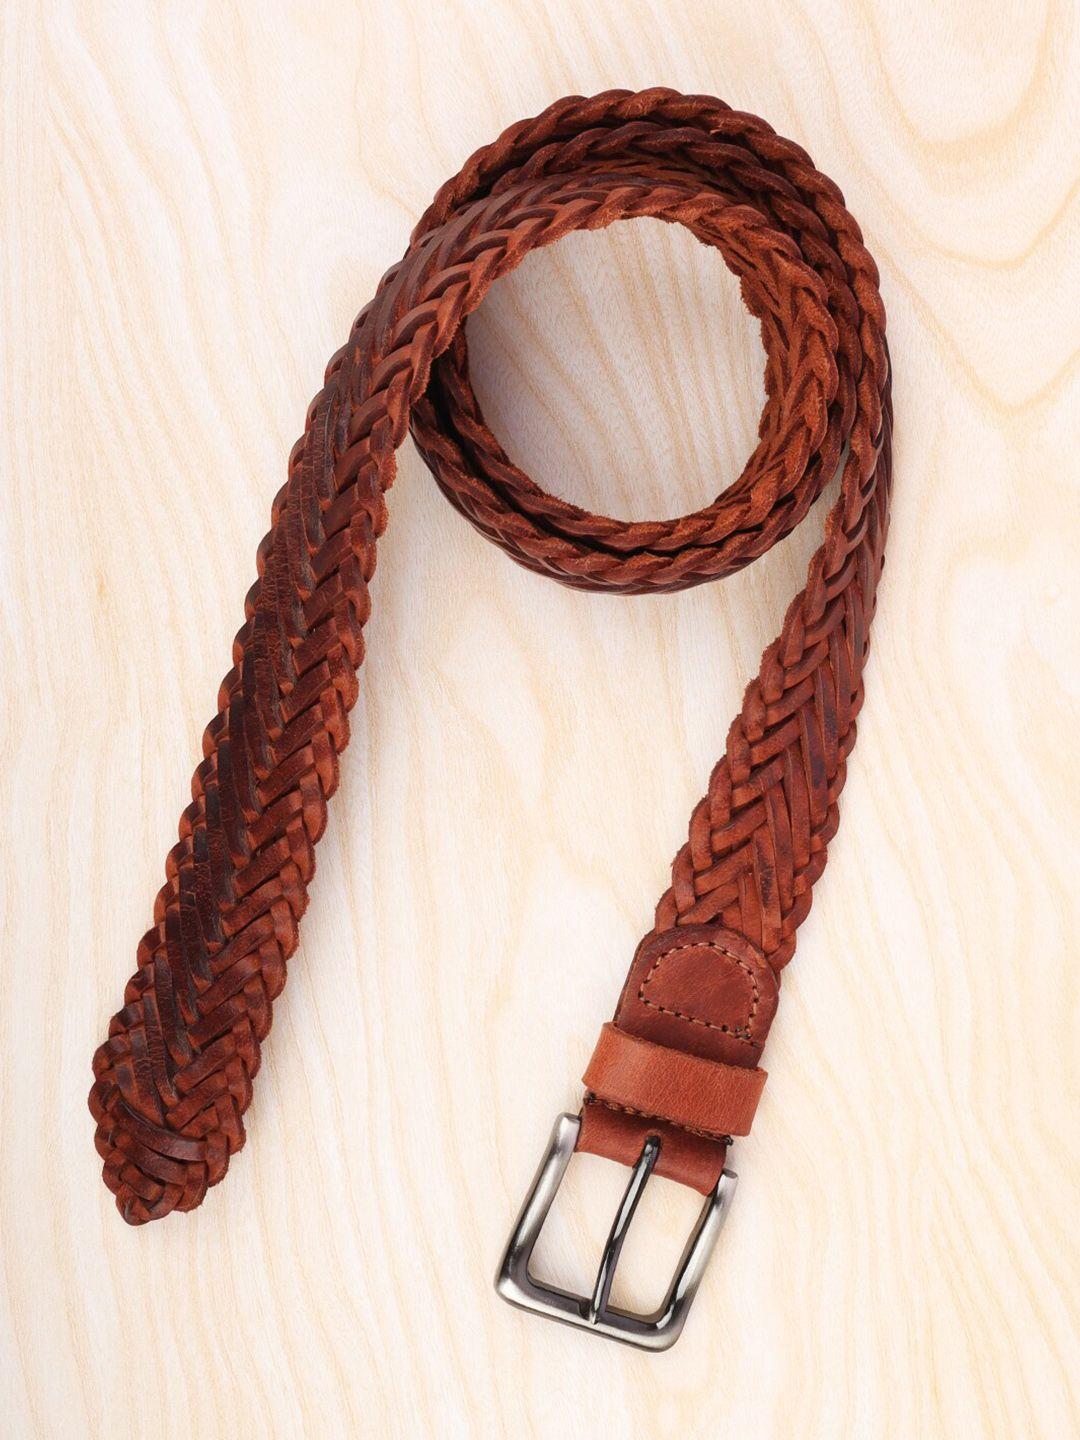 redhorns men braided leather belt